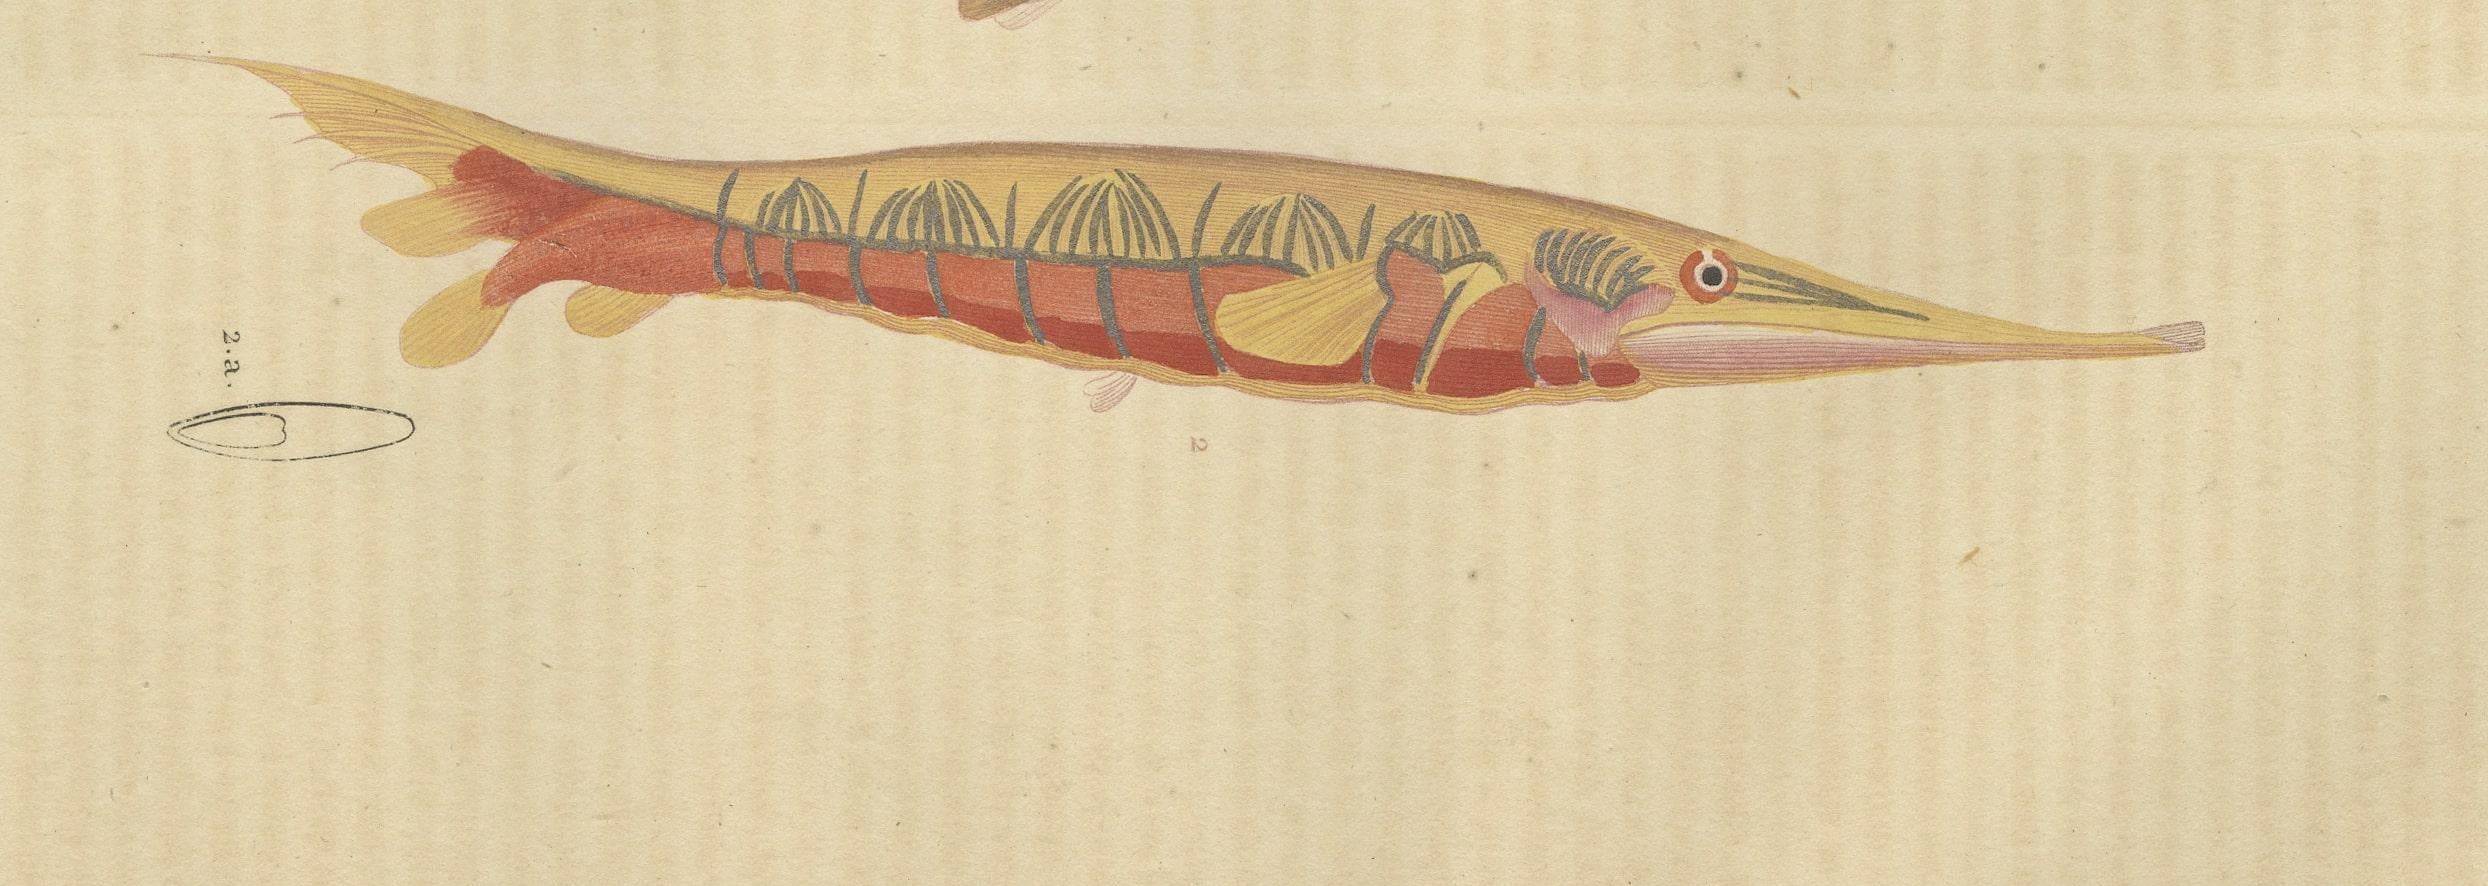 Engraved Underwater Elegance: Razorfish and Shrimpfish - A Marine Engraving Study, 1845 For Sale